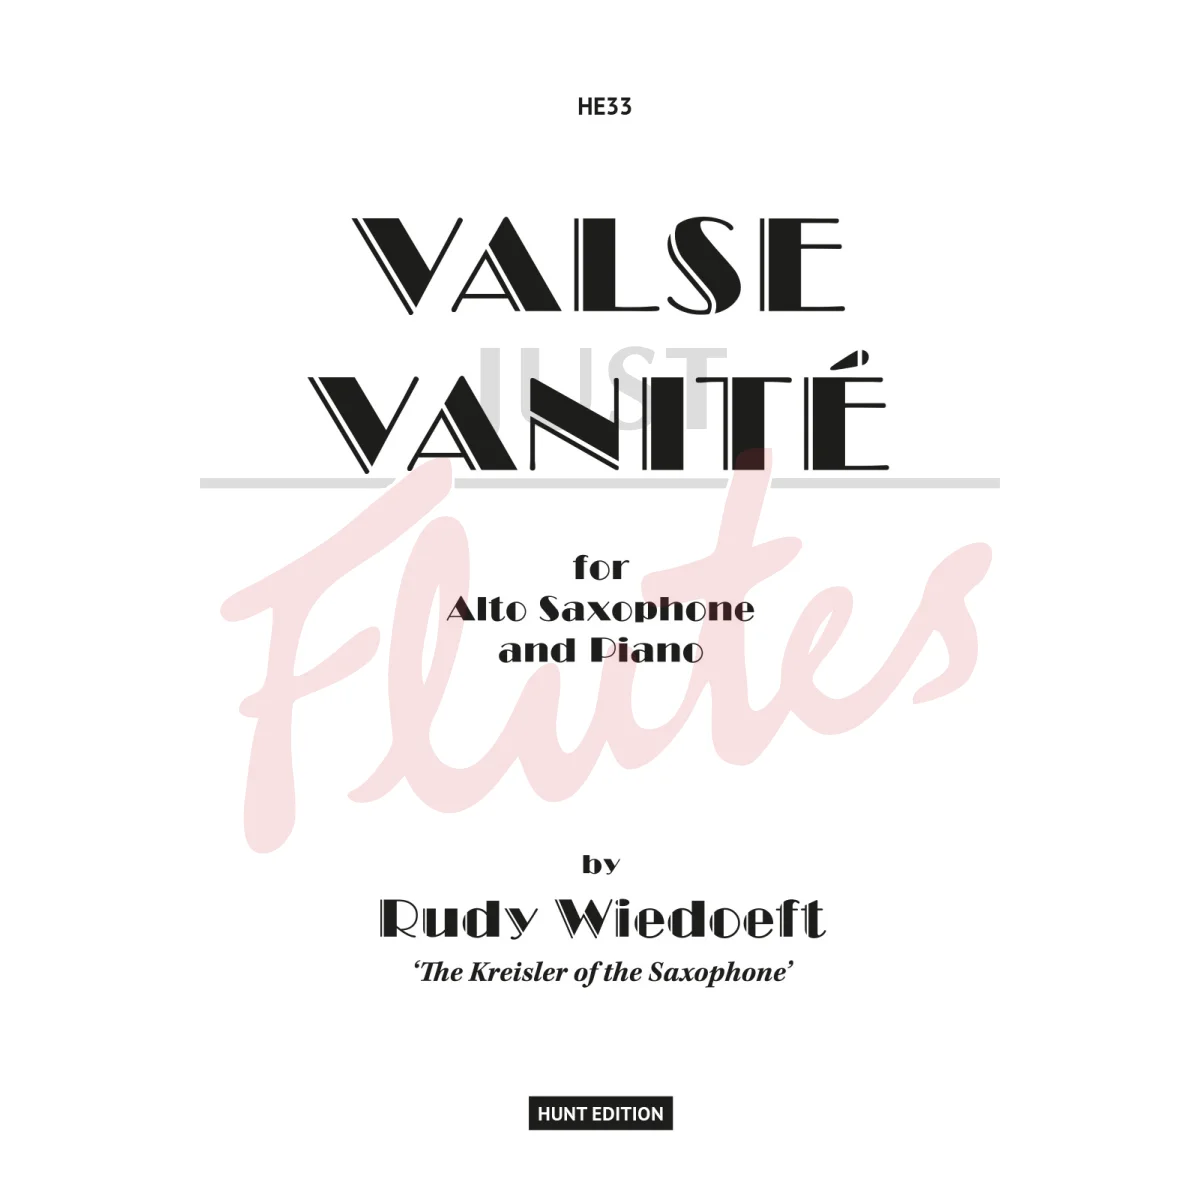 Valse Vanité for Alto Saxophone and Piano